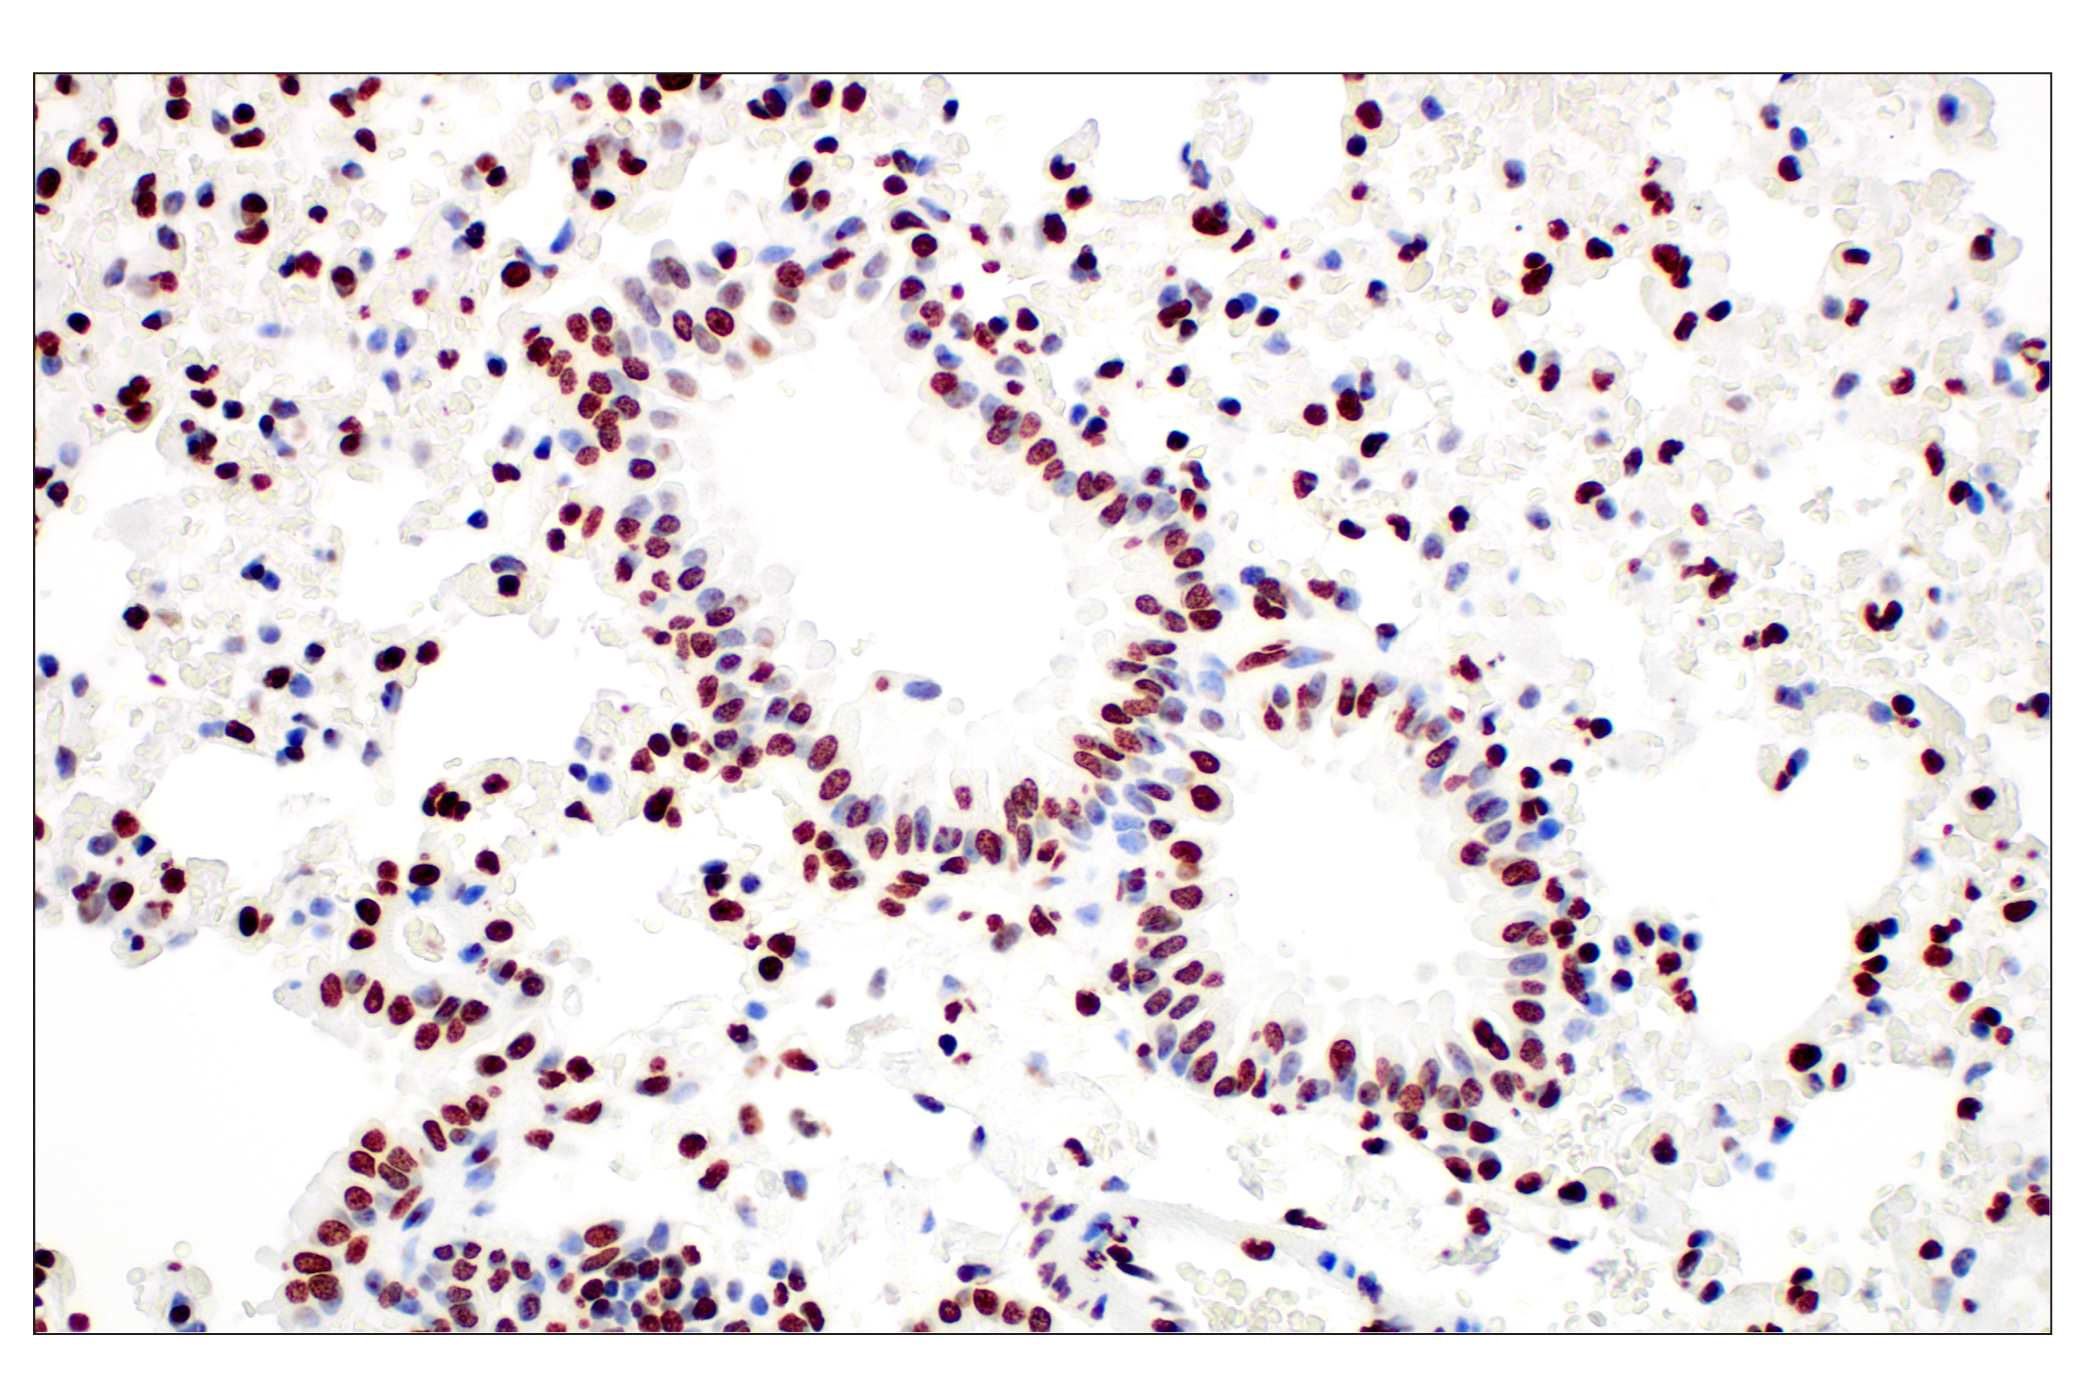  Image 31: Tri-Methyl Histone H3 Antibody Sampler Kit